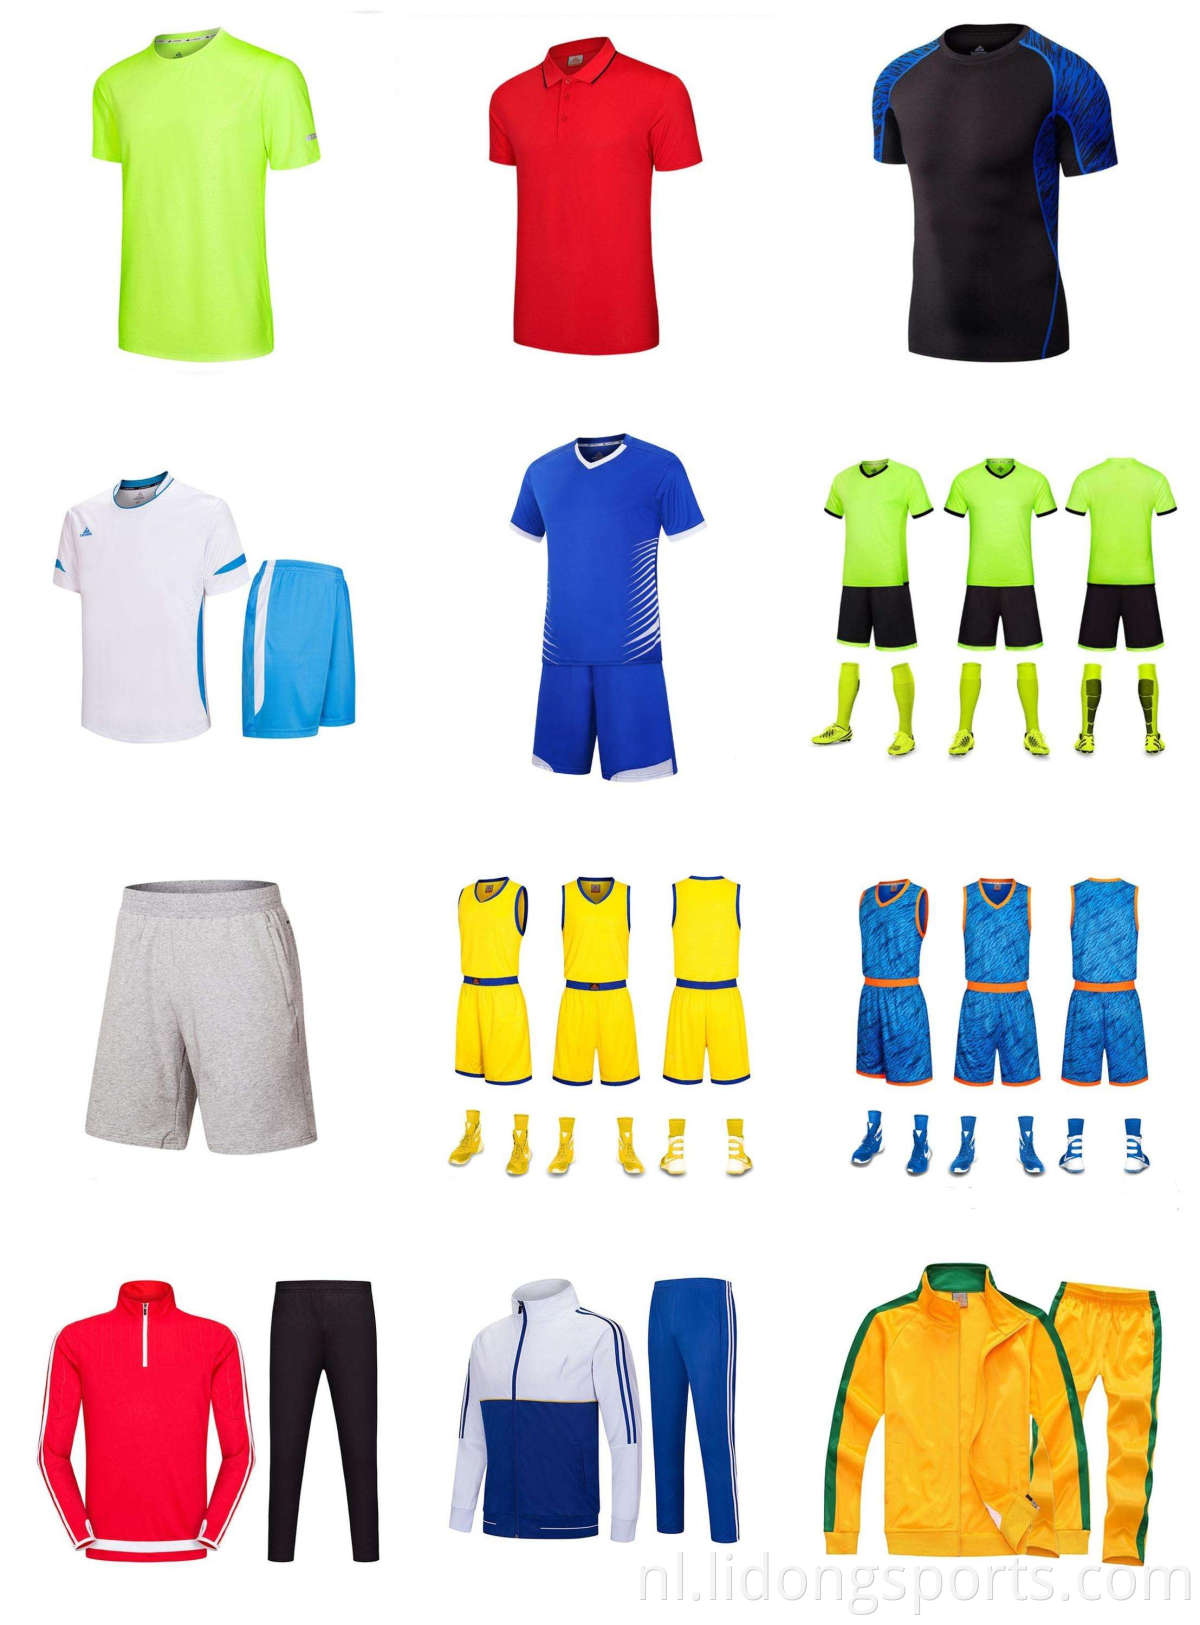 LiDong Wholesale laatste nieuwe design trainingspak goedkope heren sportkleding